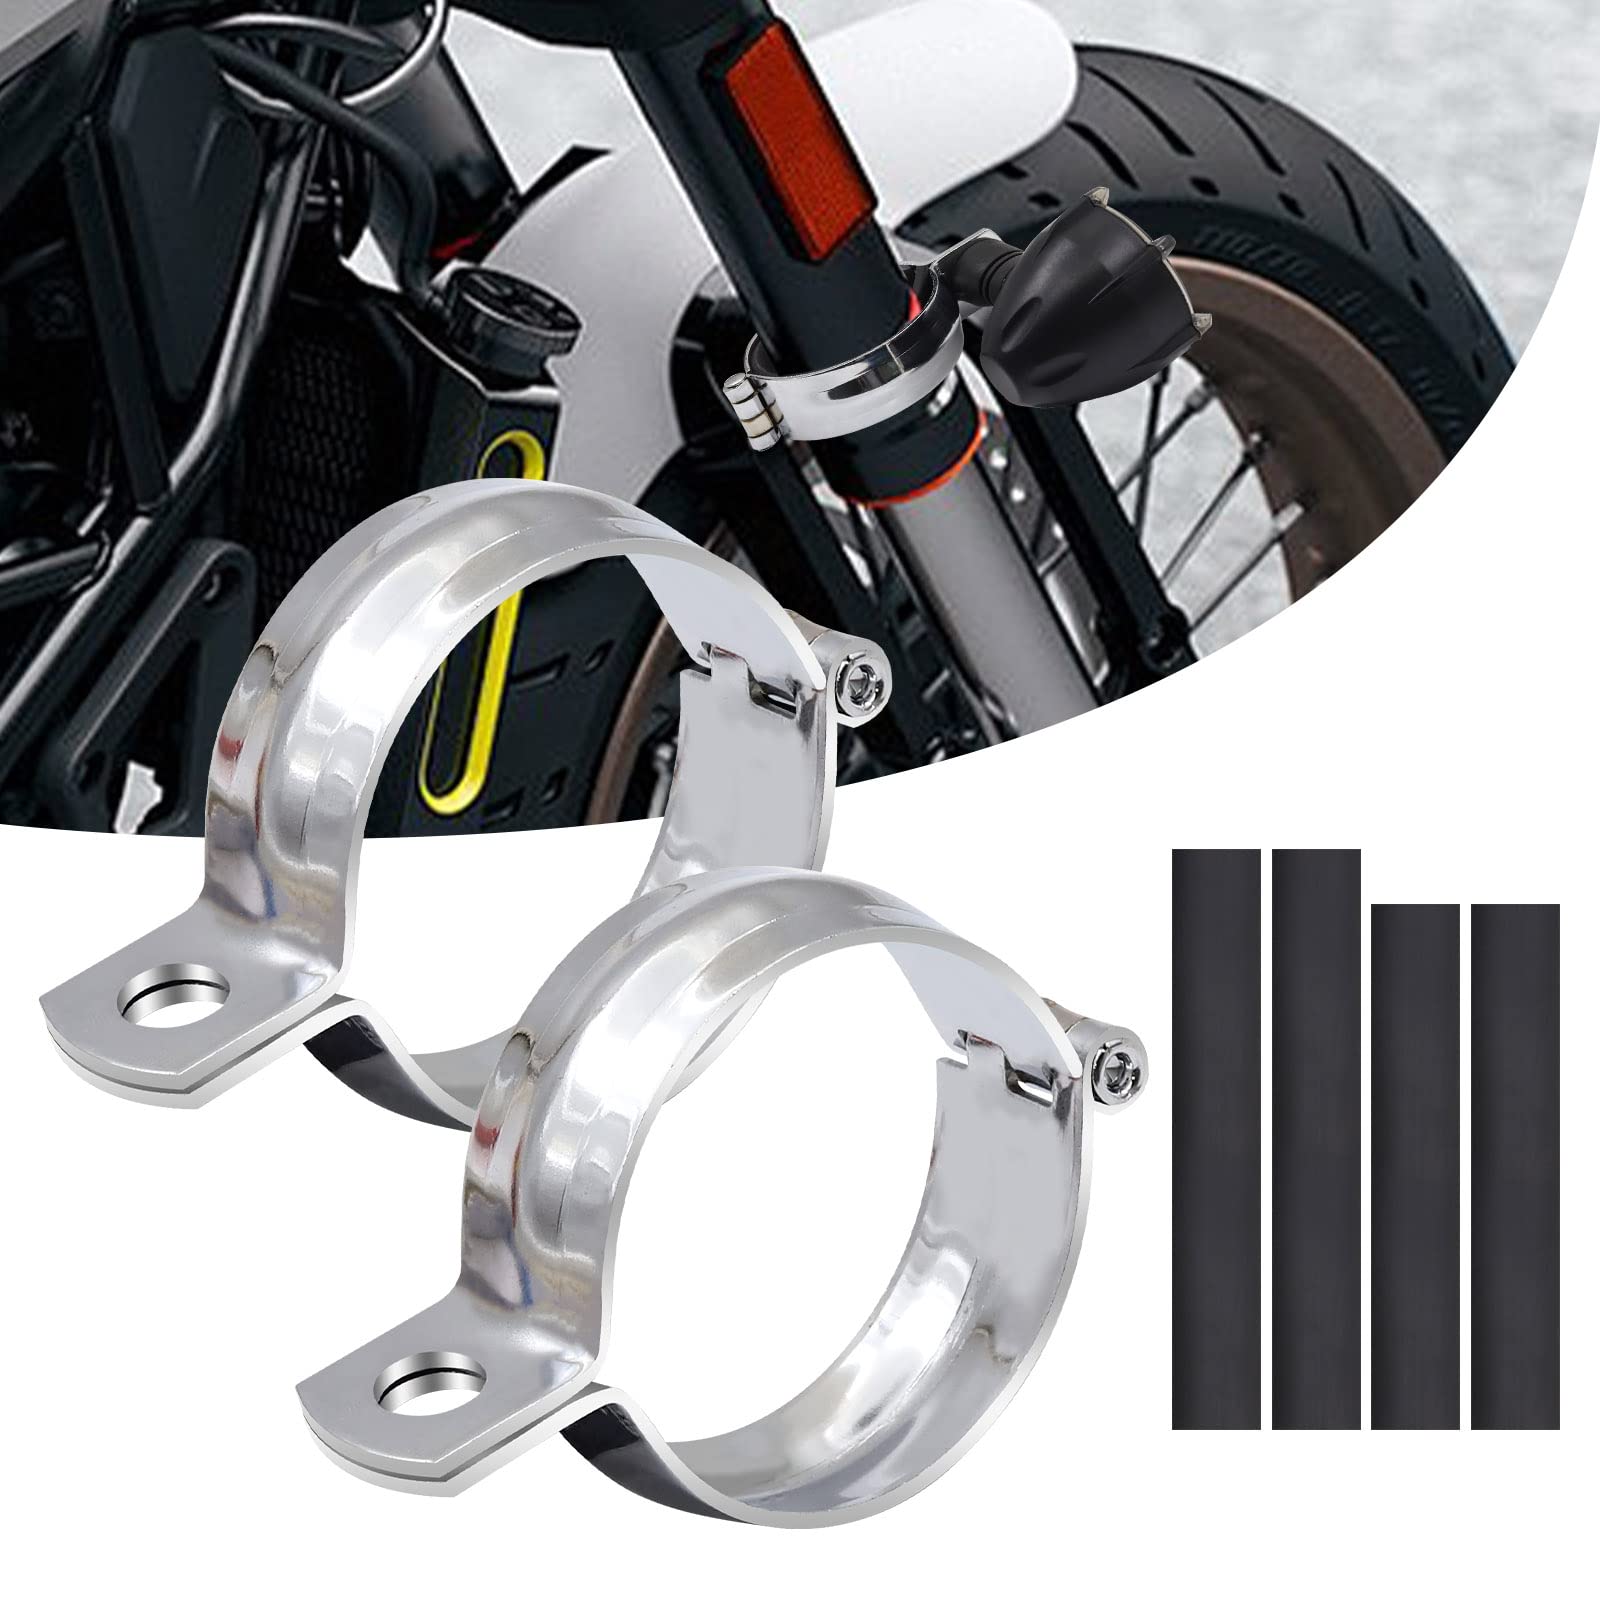 Biqing 2 x Motorrad-Blinker-Halterung, 32–41 mm, Metall, modifizierte Blinker, Blinker, Halterung, Klemme, Vordergabel (Silber) von Biqing